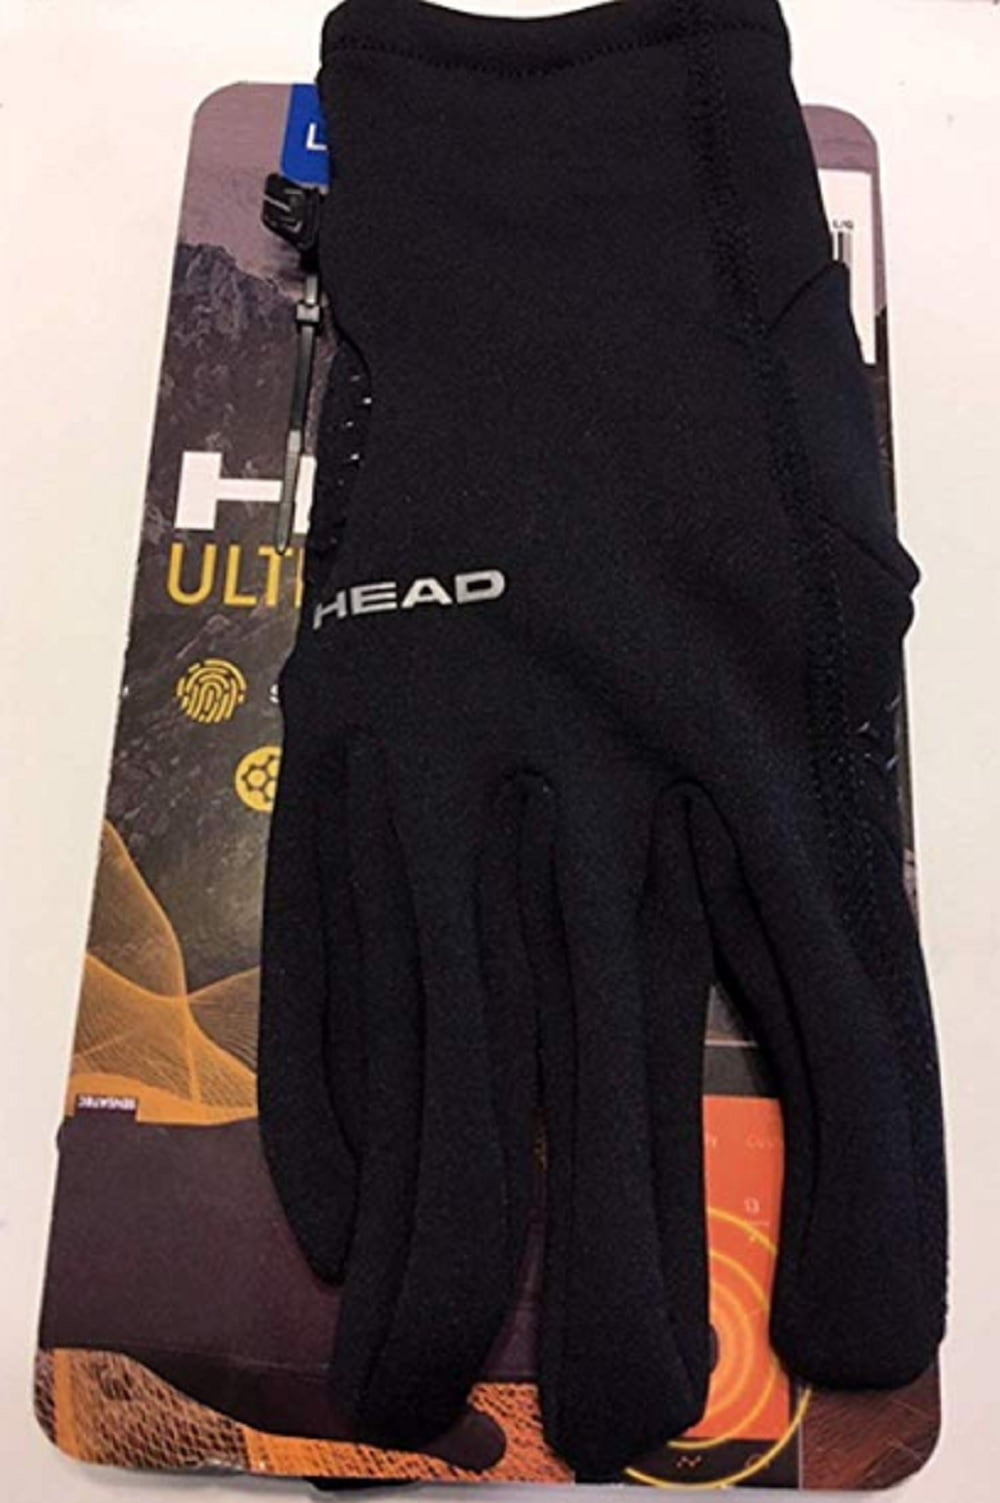 Head Ultrafit Touchscreen Running Gloves Black Silicone Palm Stretch Warm BNWT 